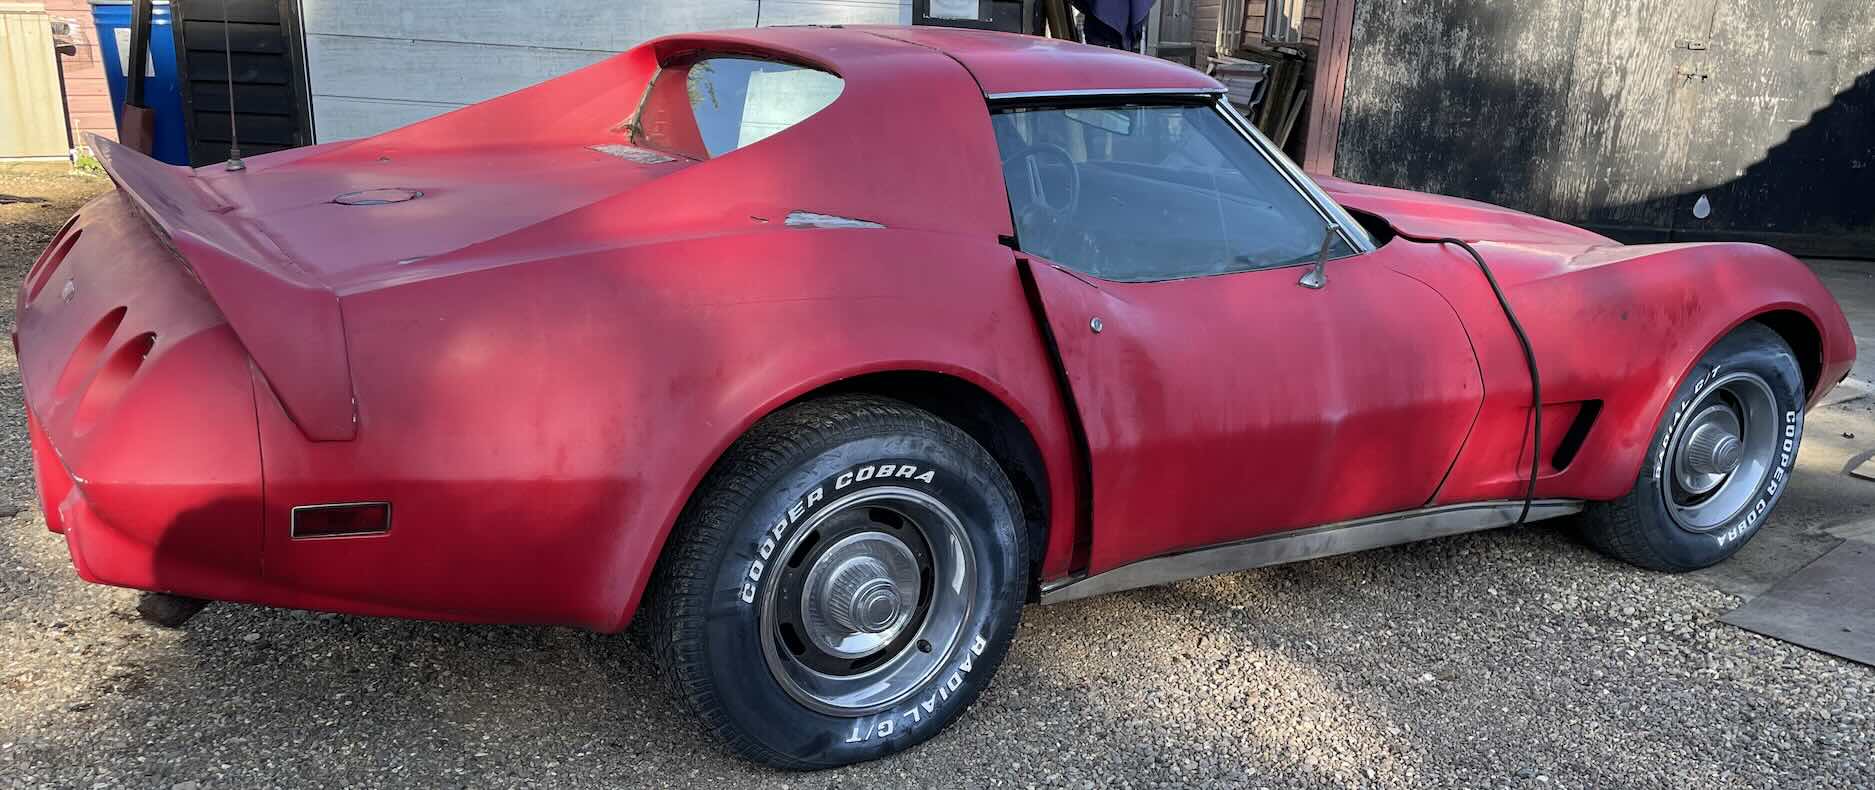 1975 Chevrolet Corvette needing restoration and repair